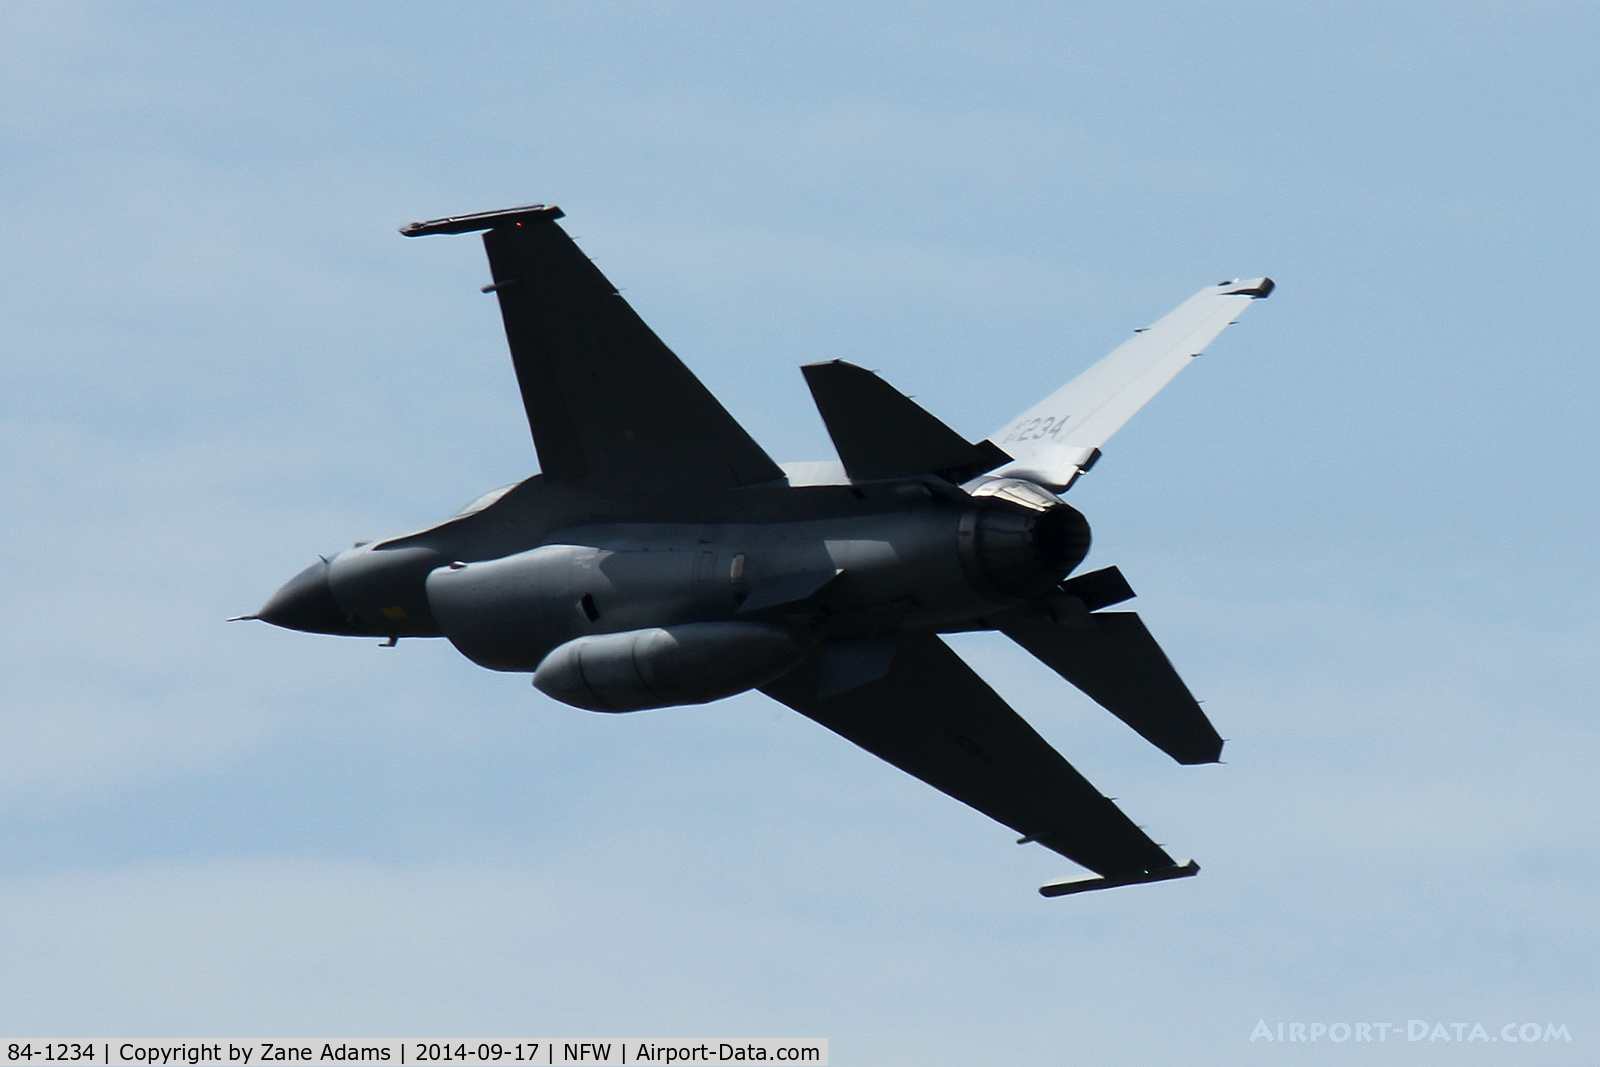 84-1234, 1984 General Dynamics F-16C Fighting Falcon C/N 5C-71, F-16, departing NASJRB Fort Worth